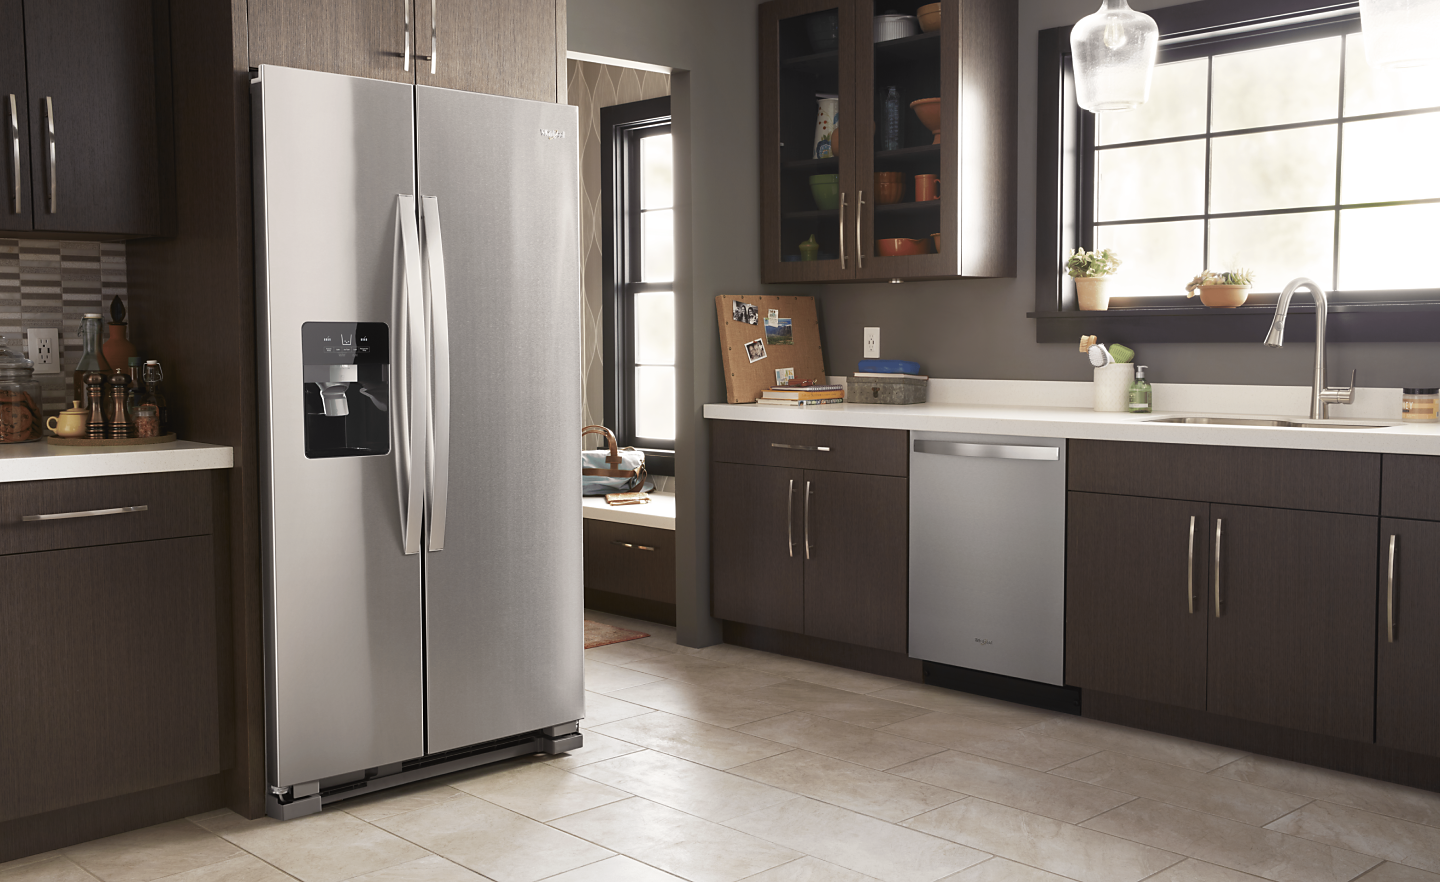 Large-Capacity Refrigerators